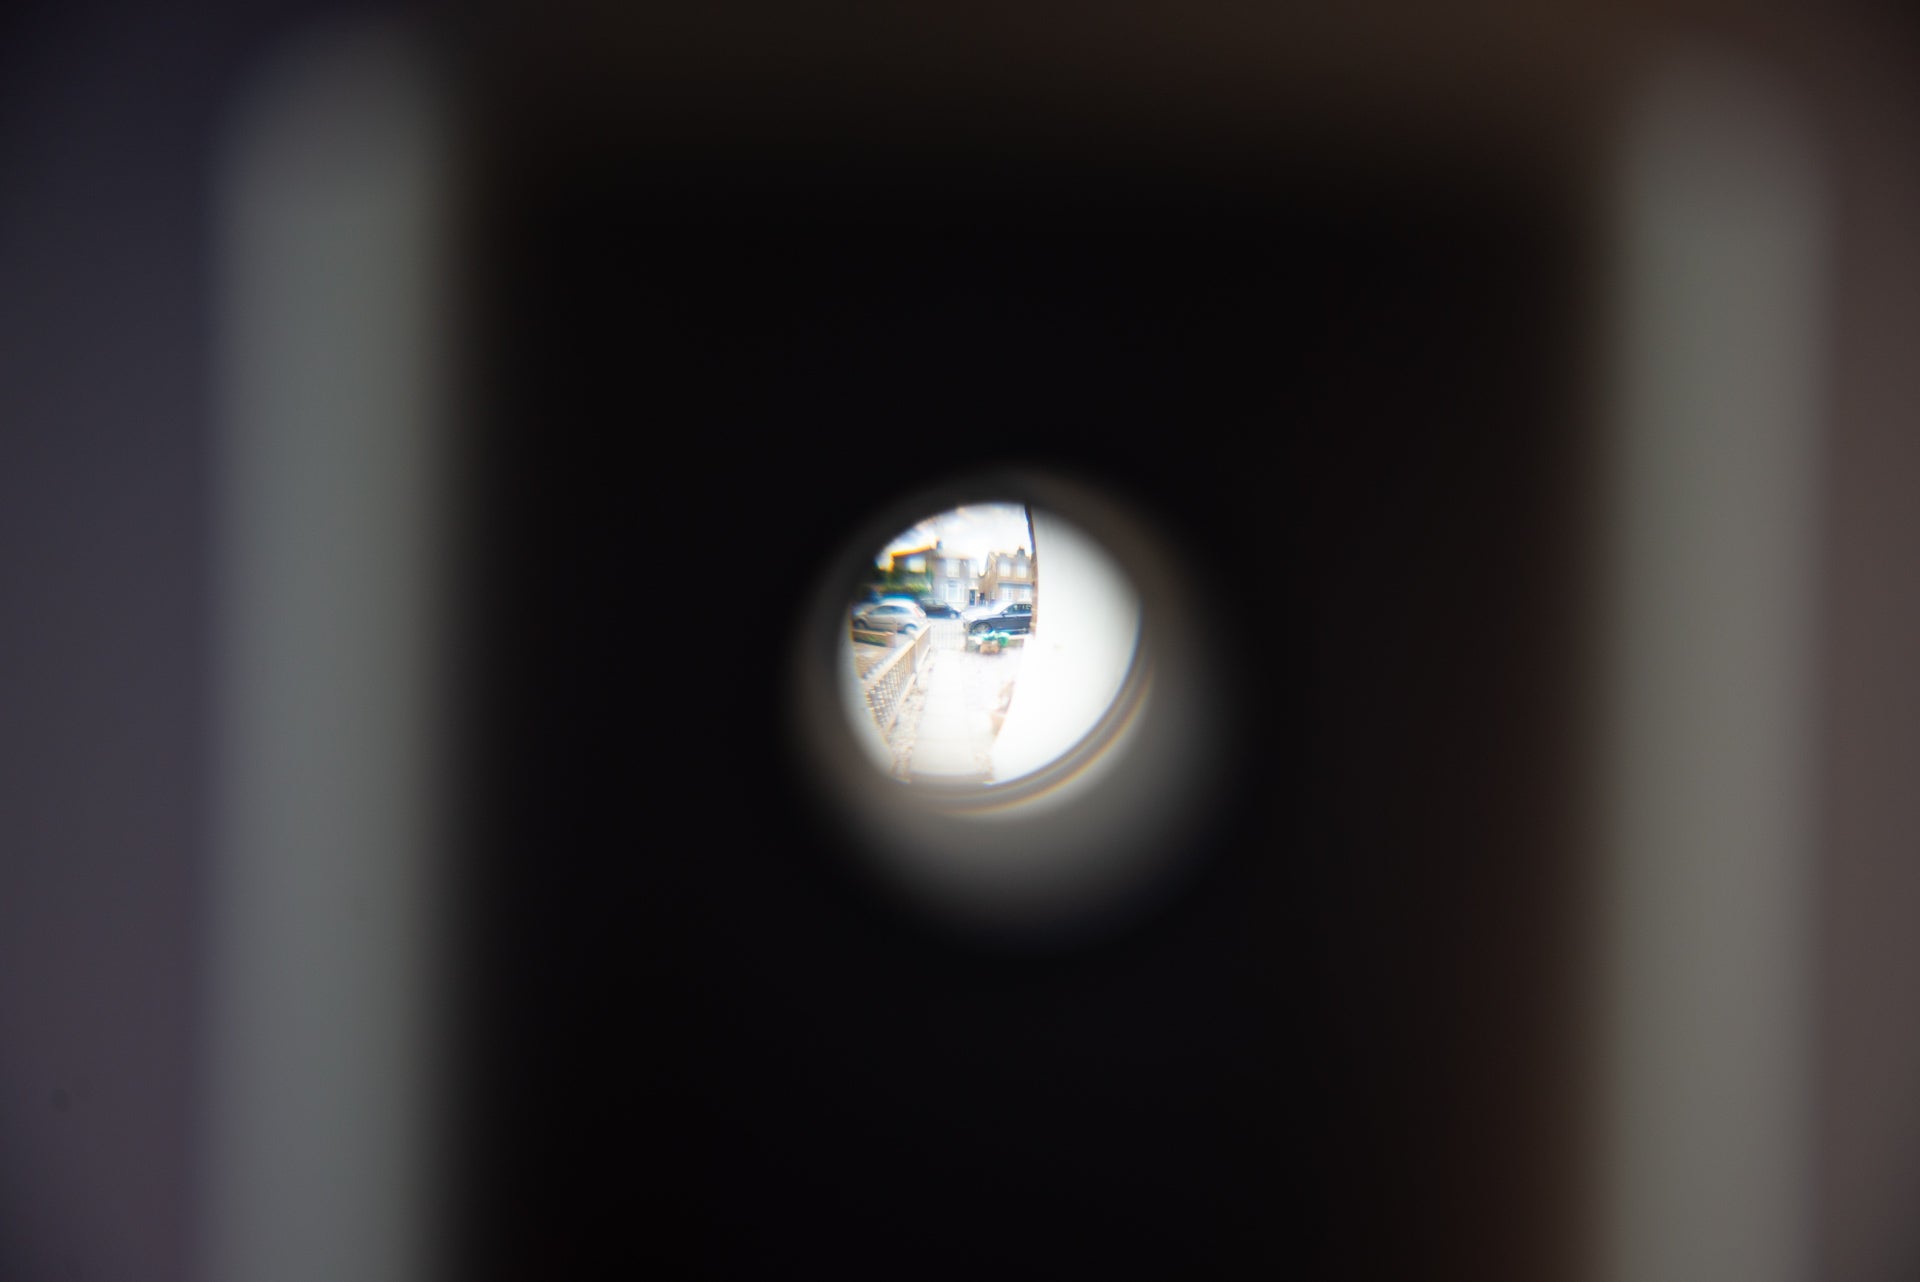 Ring Door View Cam through the peephole